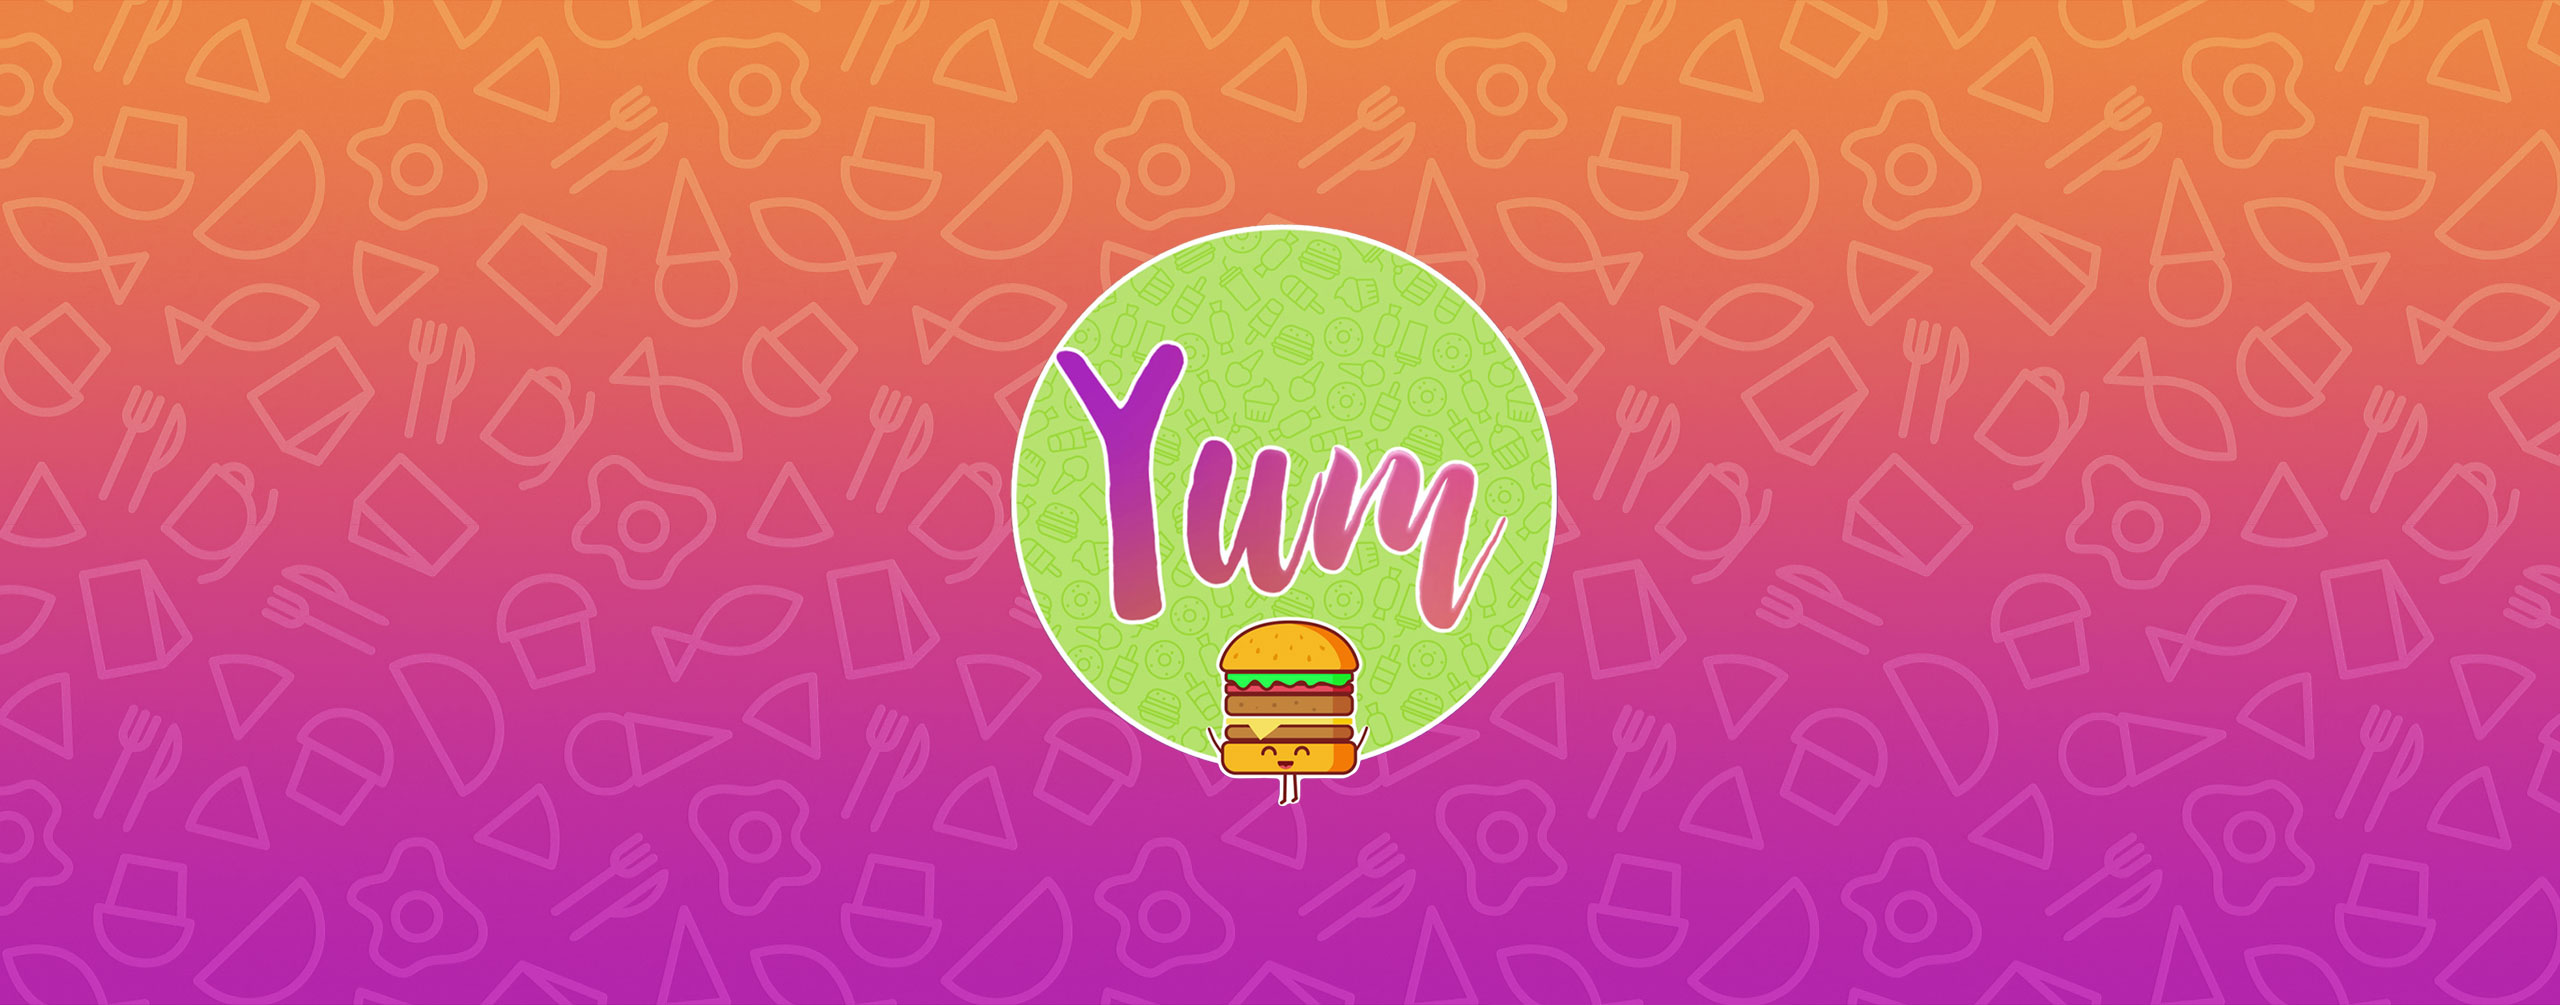 Yum - Food Video Elements